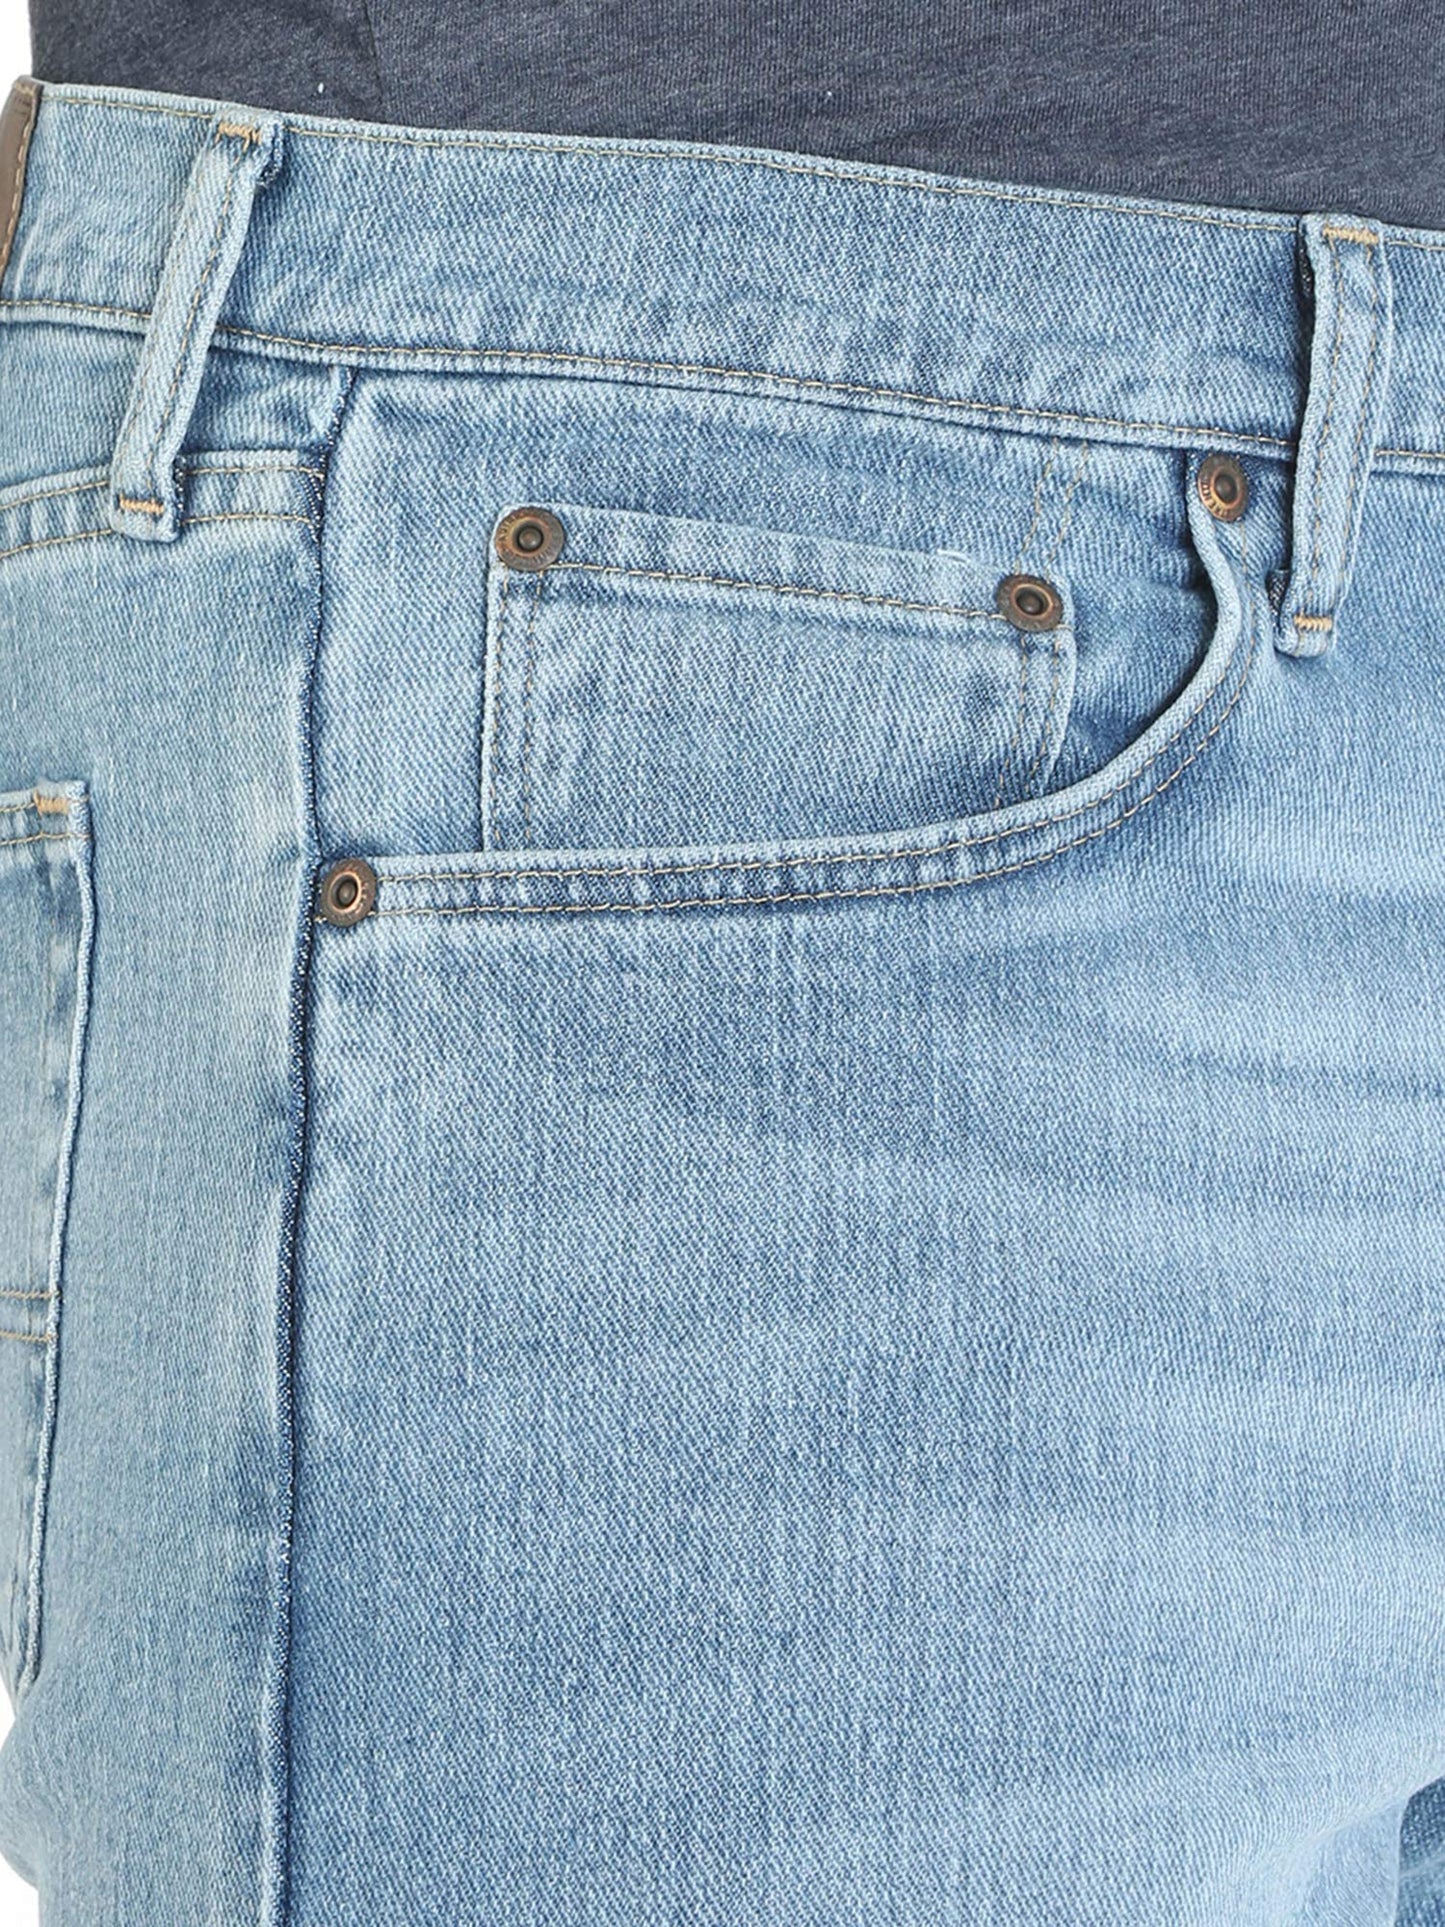 Wrangler Authentics Men's Classic 5-Pocket Relaxed Fit Jean, Stonewash Flex, 38W x 30L